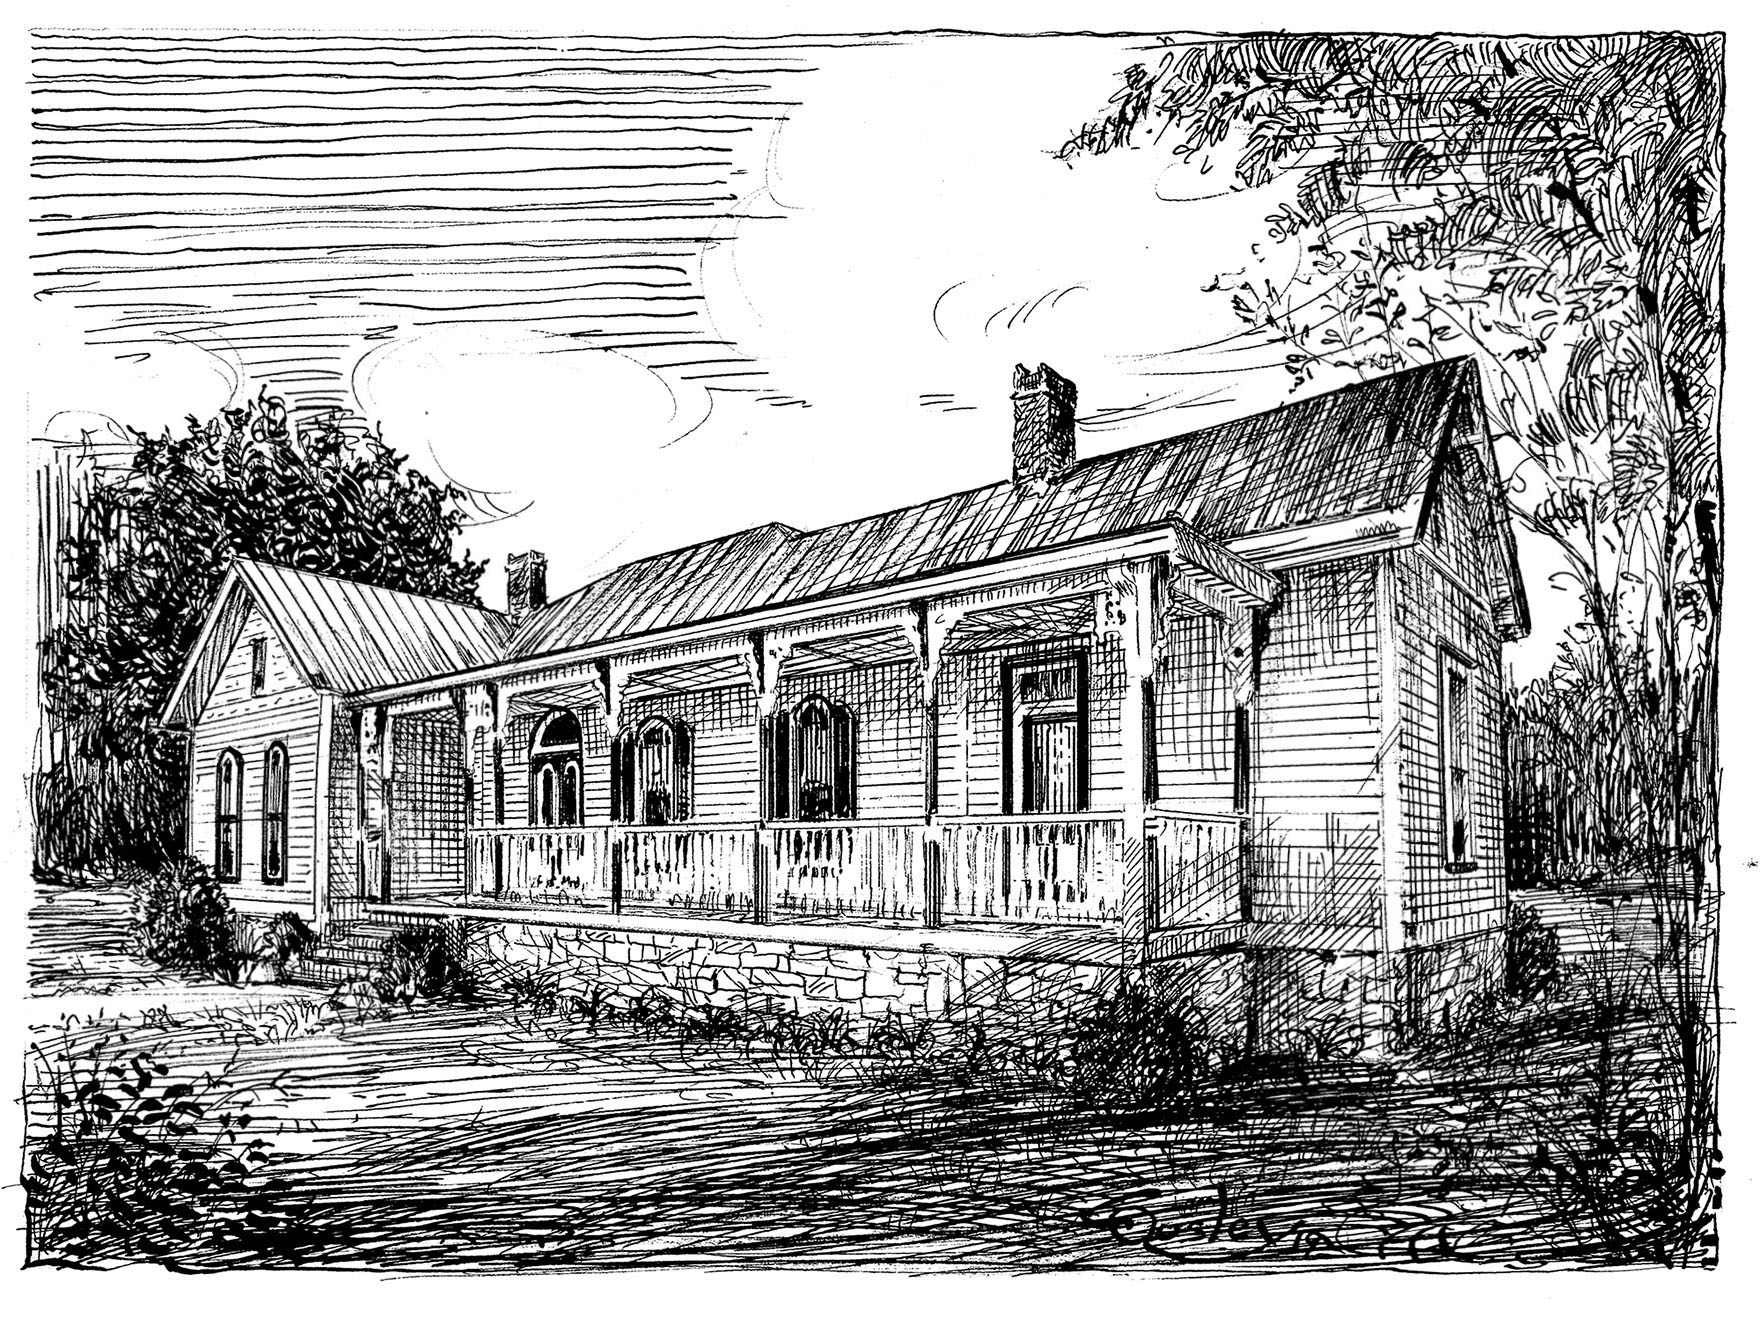 Morton-Brittain Historic Home in Nolensville Tennessee